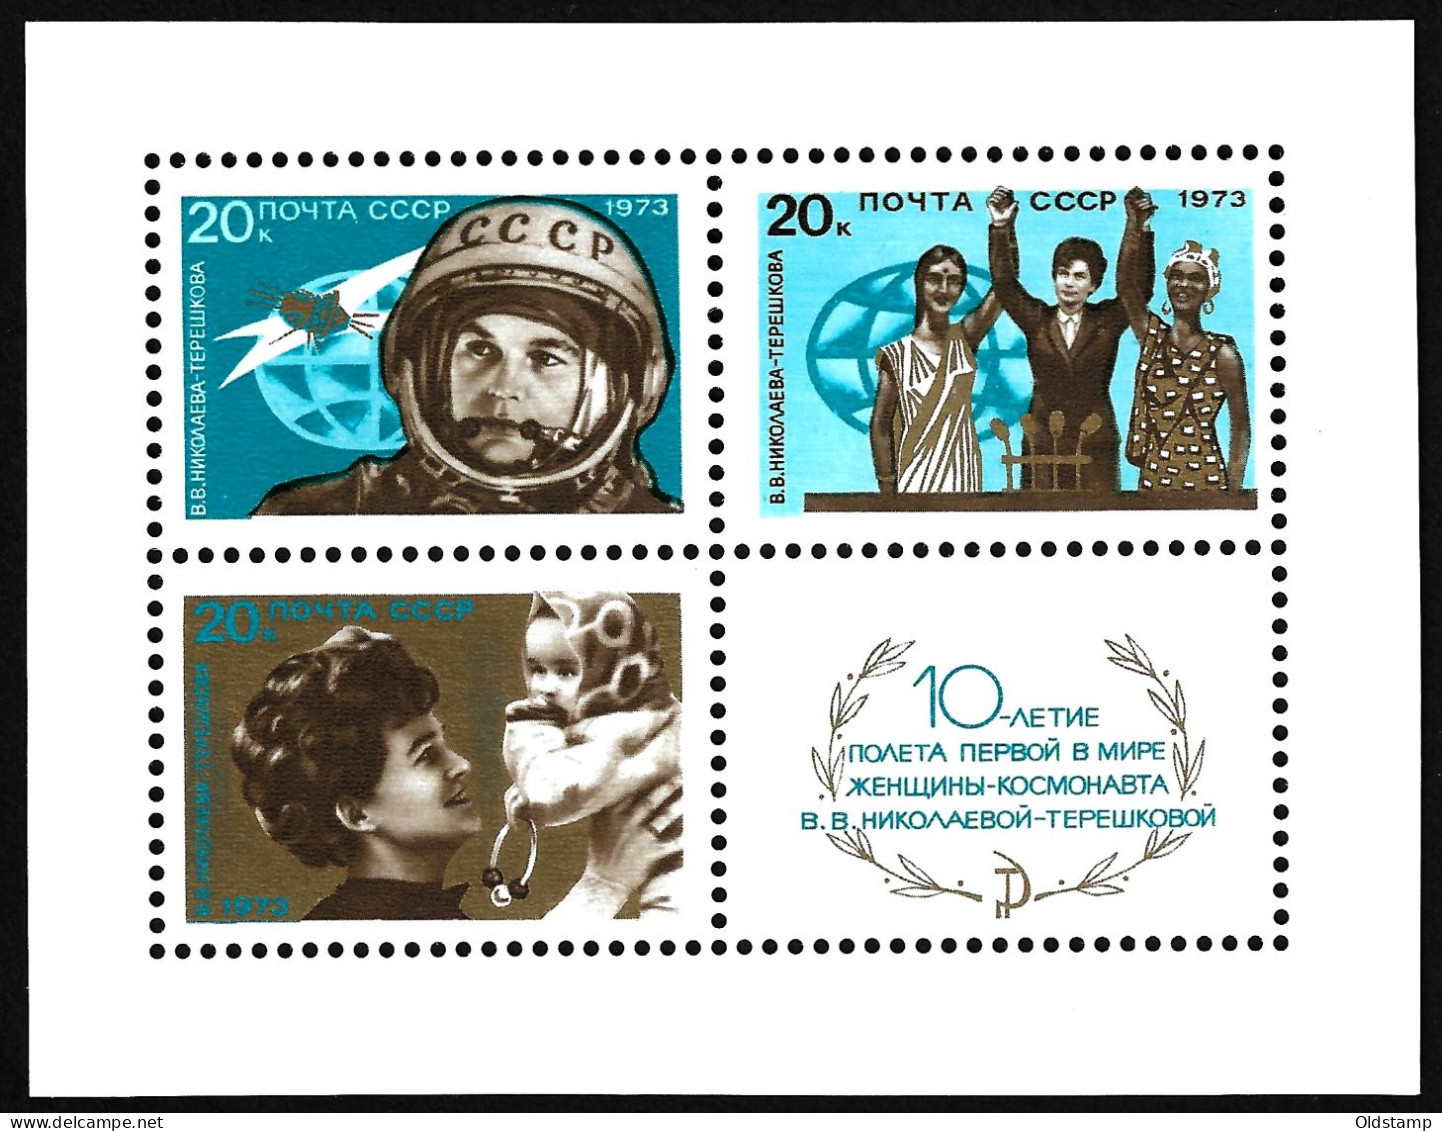 SPACE USSR 1973 MNH GAGARIN Soviet Union 20k. Space Gagarin 10th Flight Tereshkova MNH Stamp Mi. Block # - Verzamelingen